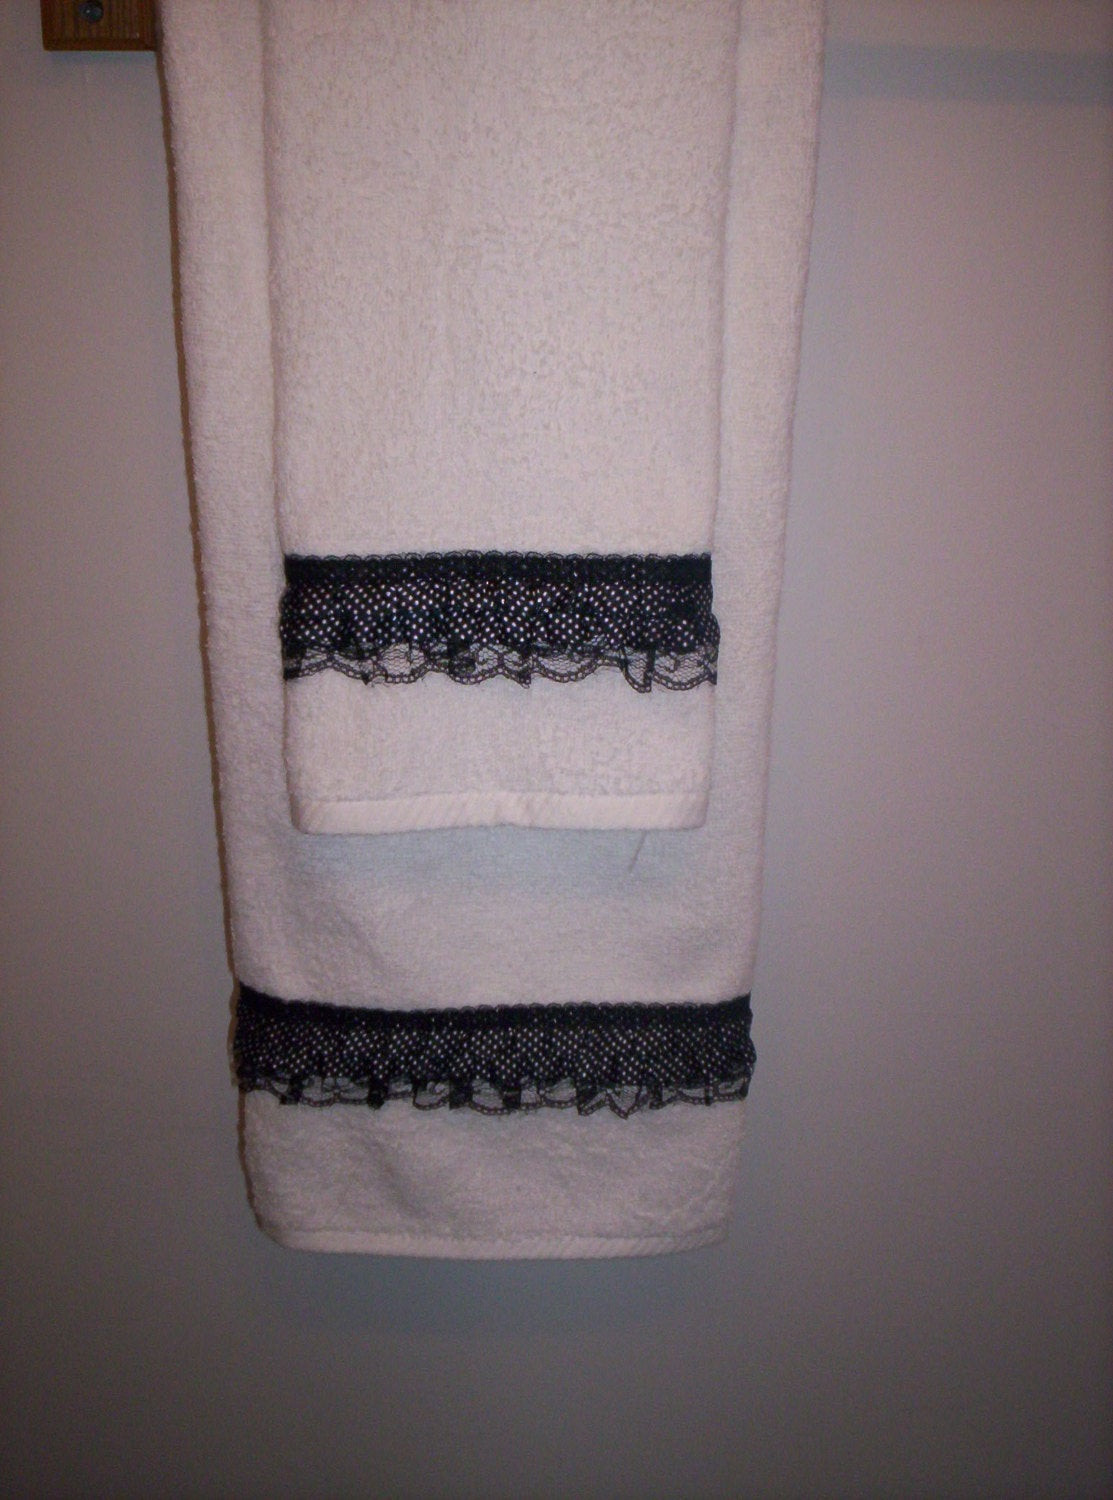 Decorative Bathroom Towel Sets
 Decorative Bath Towel Set Black White by AffordableGiftsByLJ